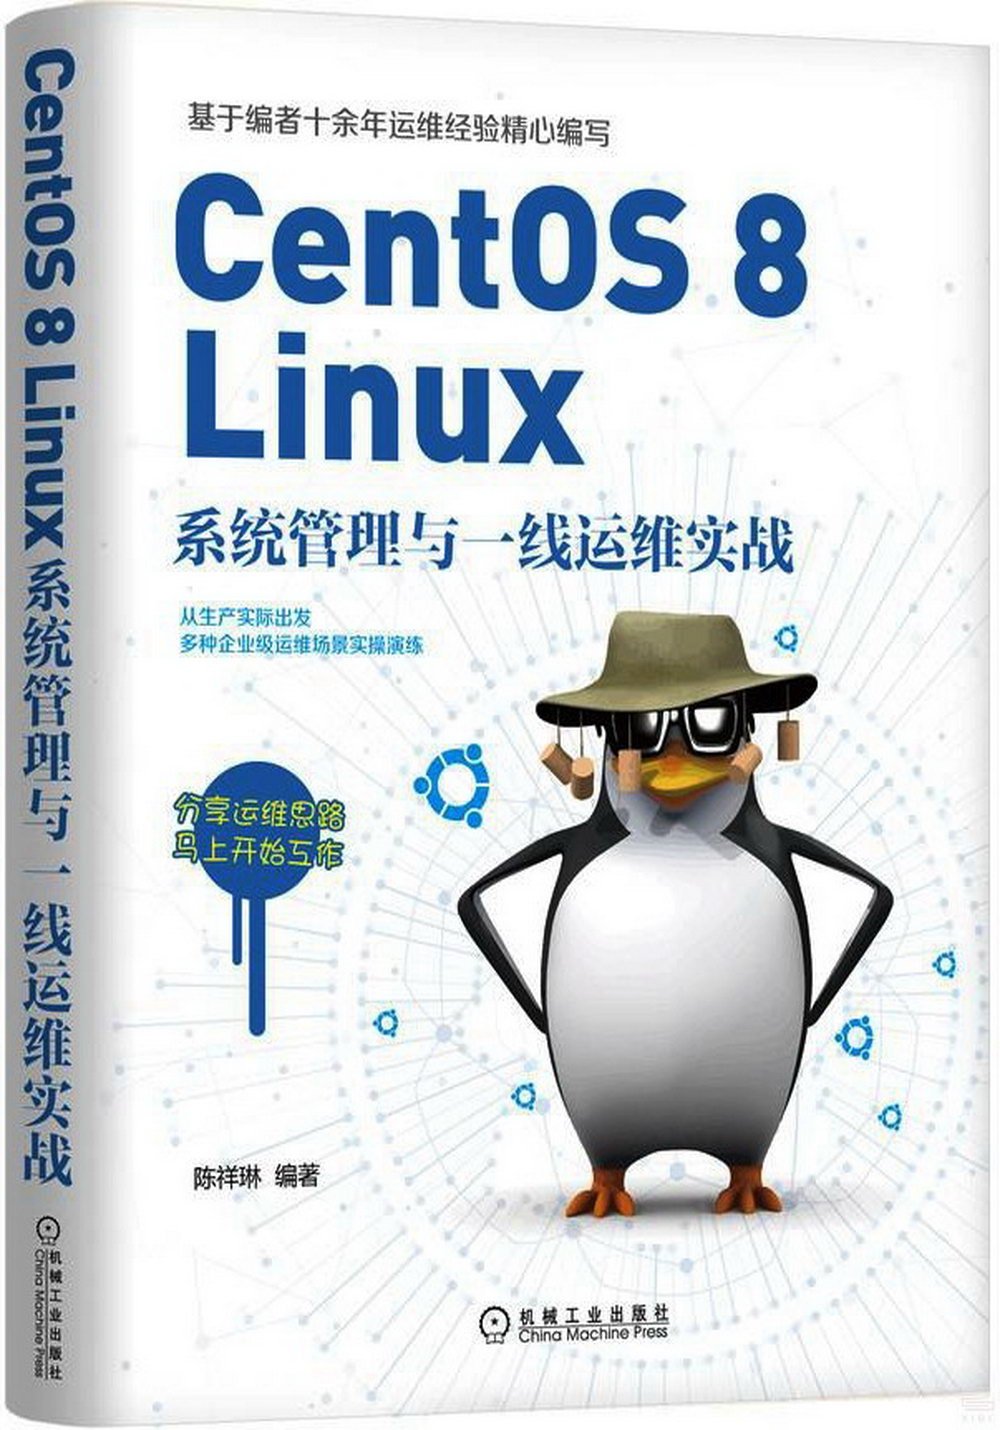 CentOS 8 Linux系統管理與一線運維實戰